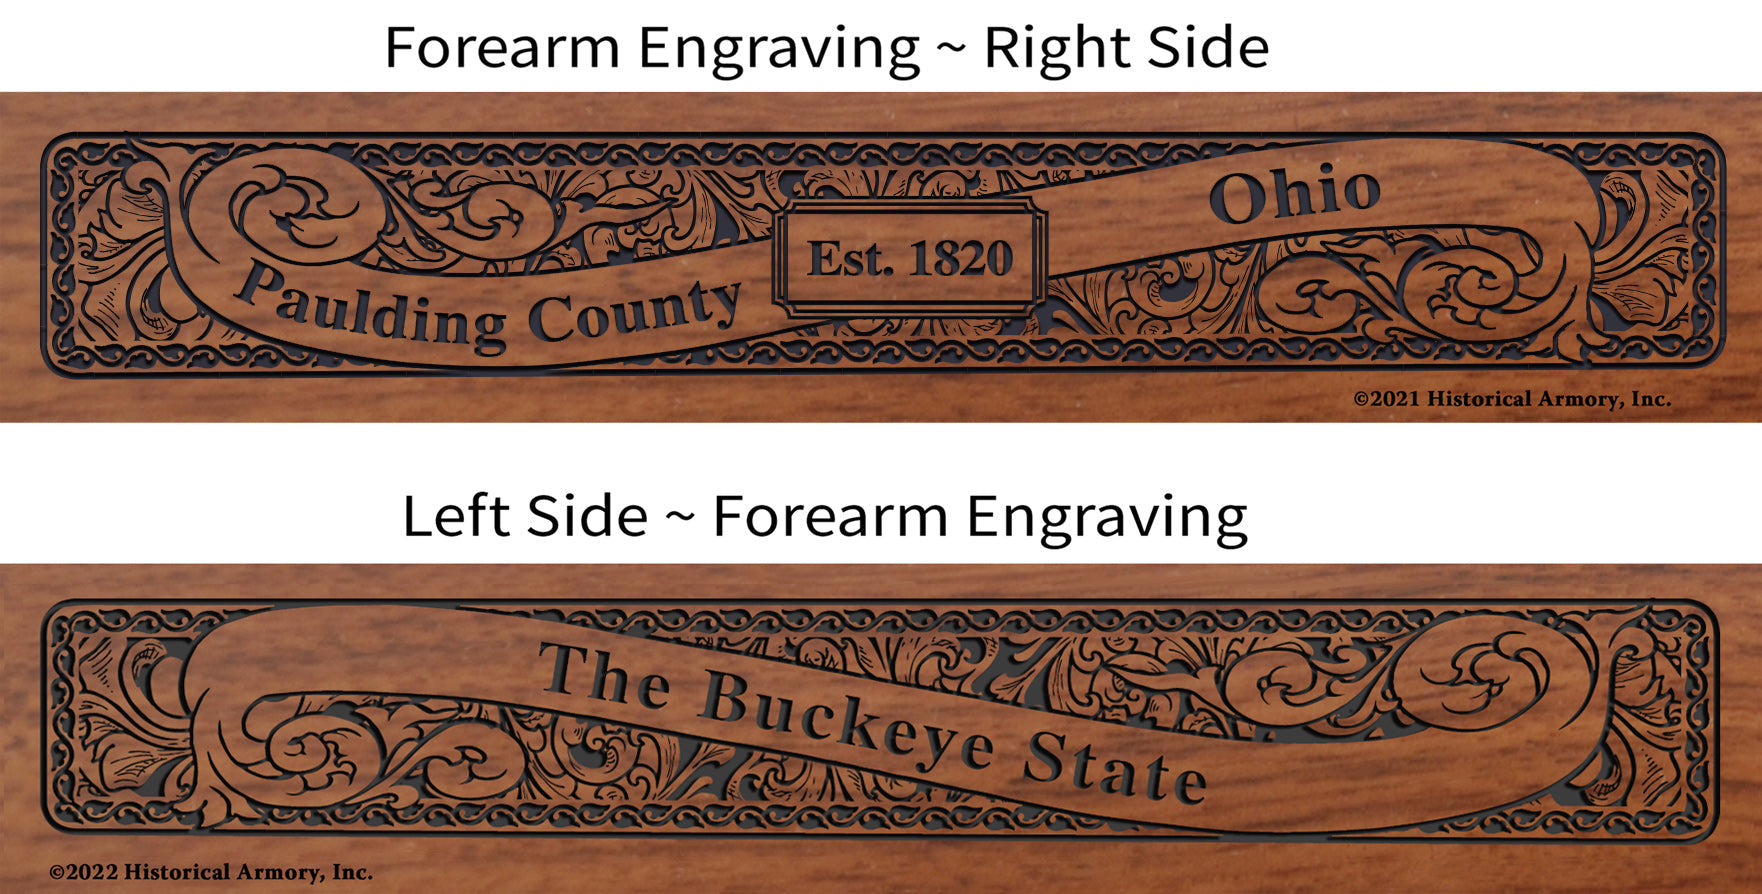 Paulding County Ohio Engraved Rifle Forearm